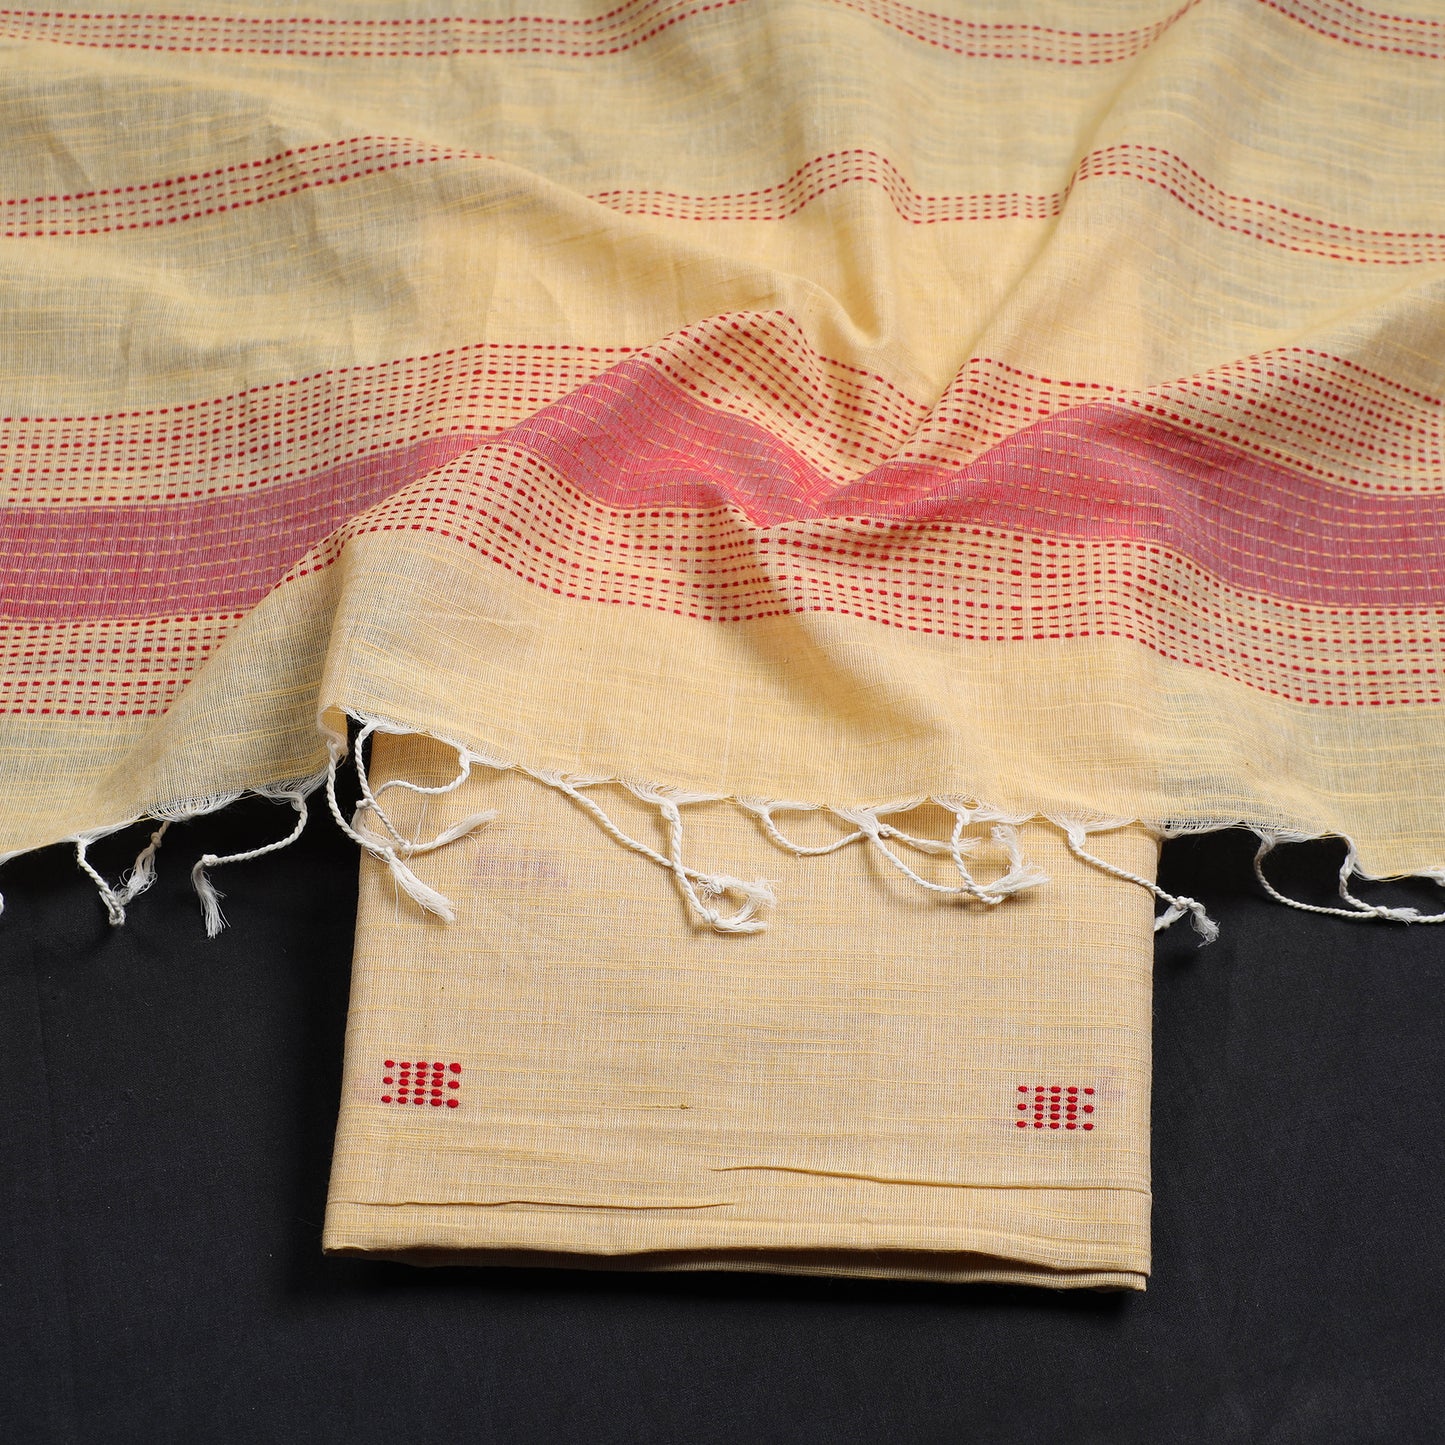 Yellow - 2pc Phulia Jacquard Weave Handloom Cotton Suit Material Set